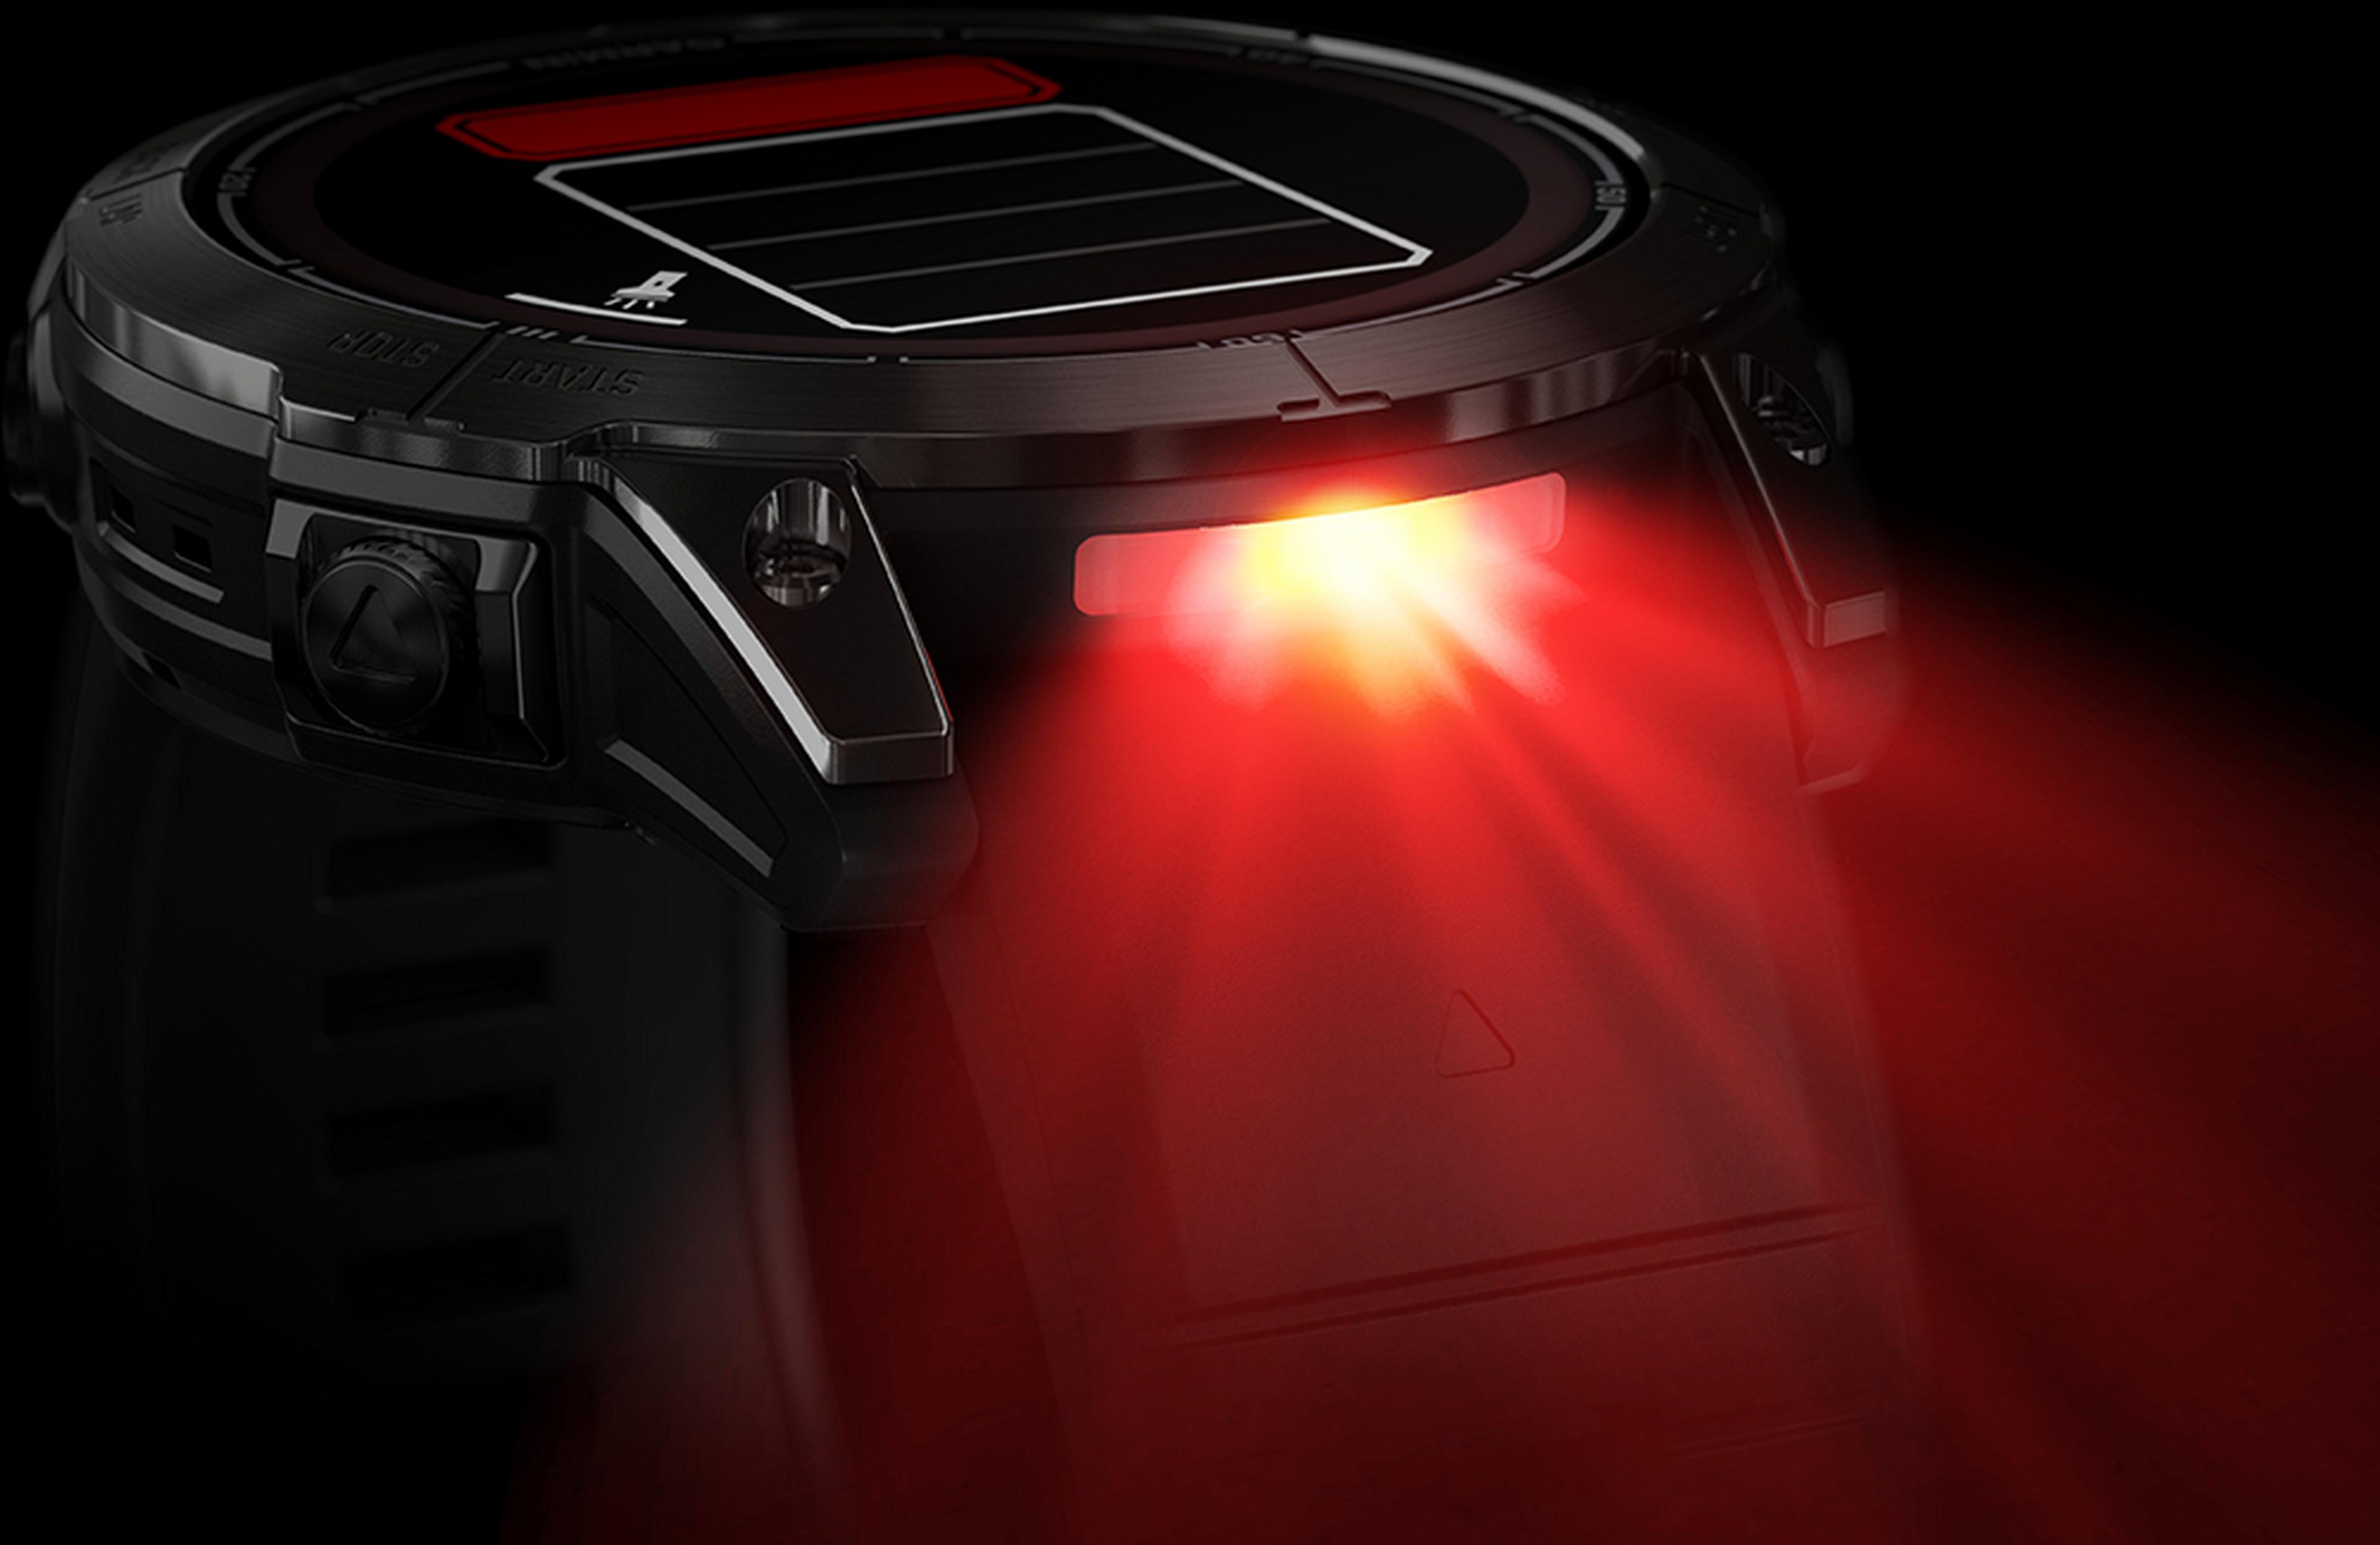 Garmin fenix 7X Pro Sapphire Solar Titanium GPS Watch